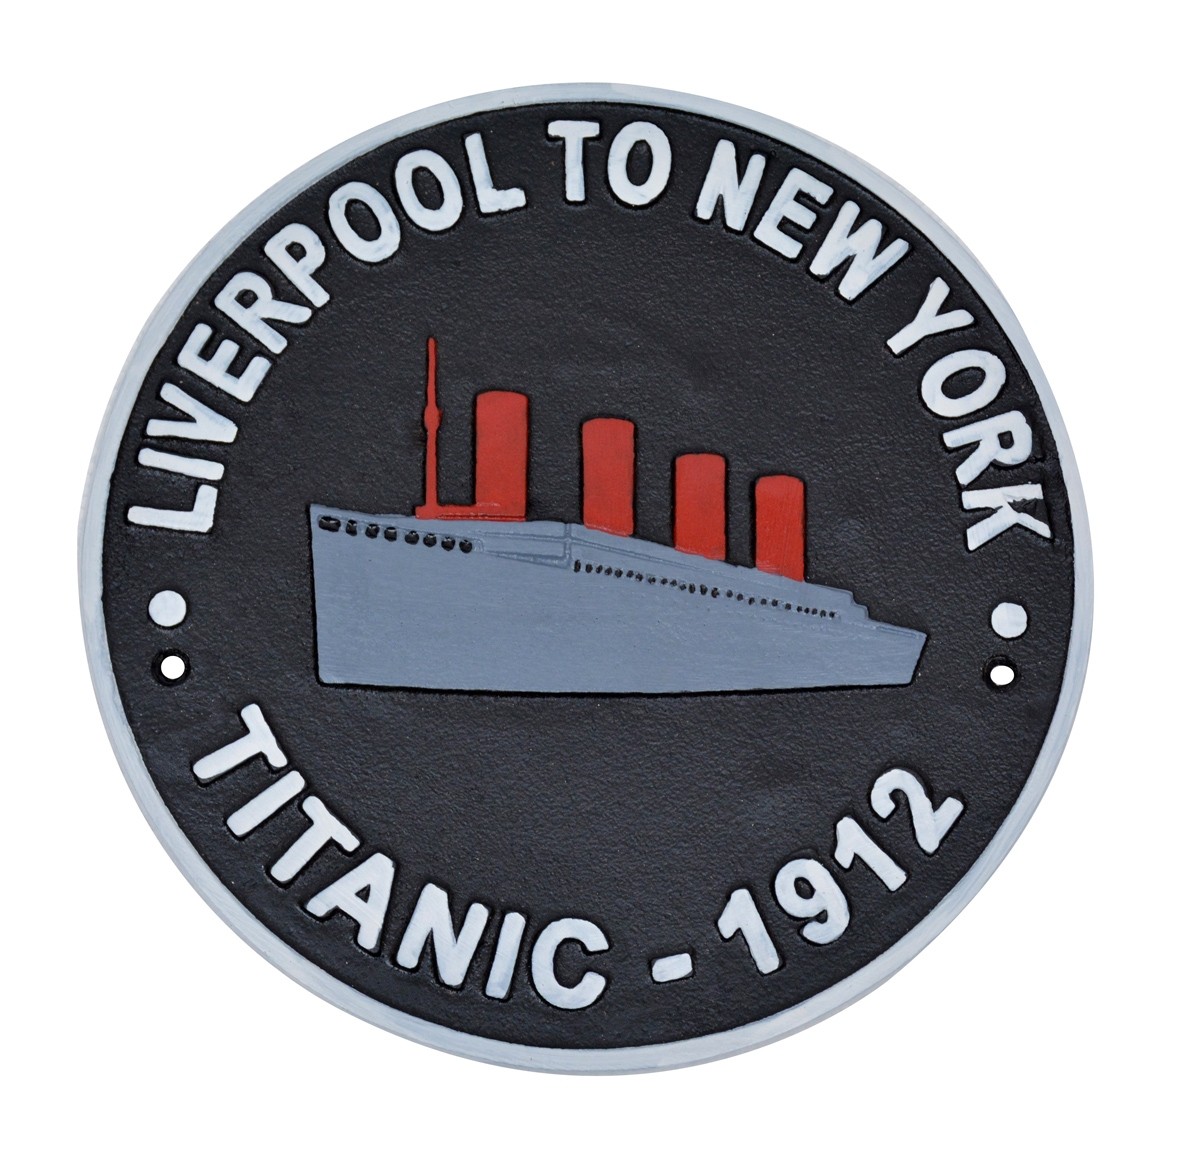 Titanic Wall Cast Iron Sign / Plaque 25.4cm 